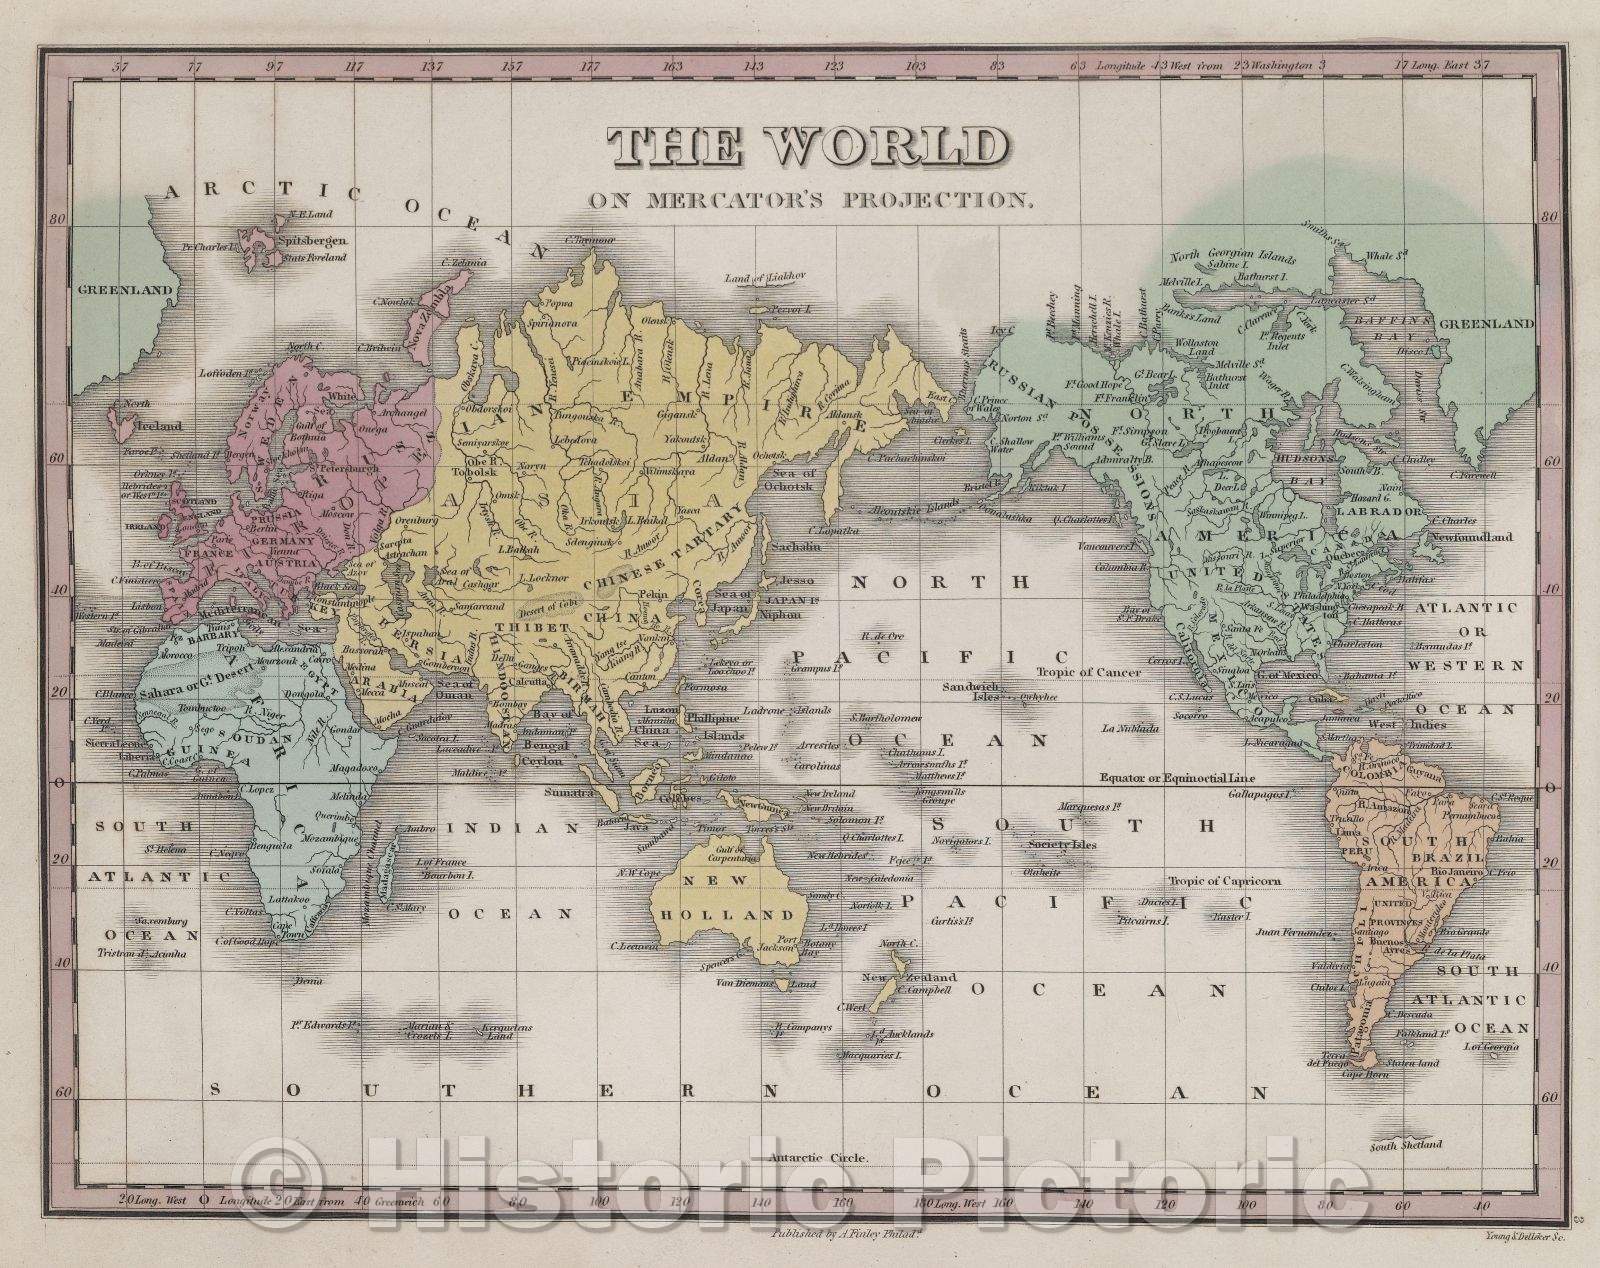 Mercator's Projection